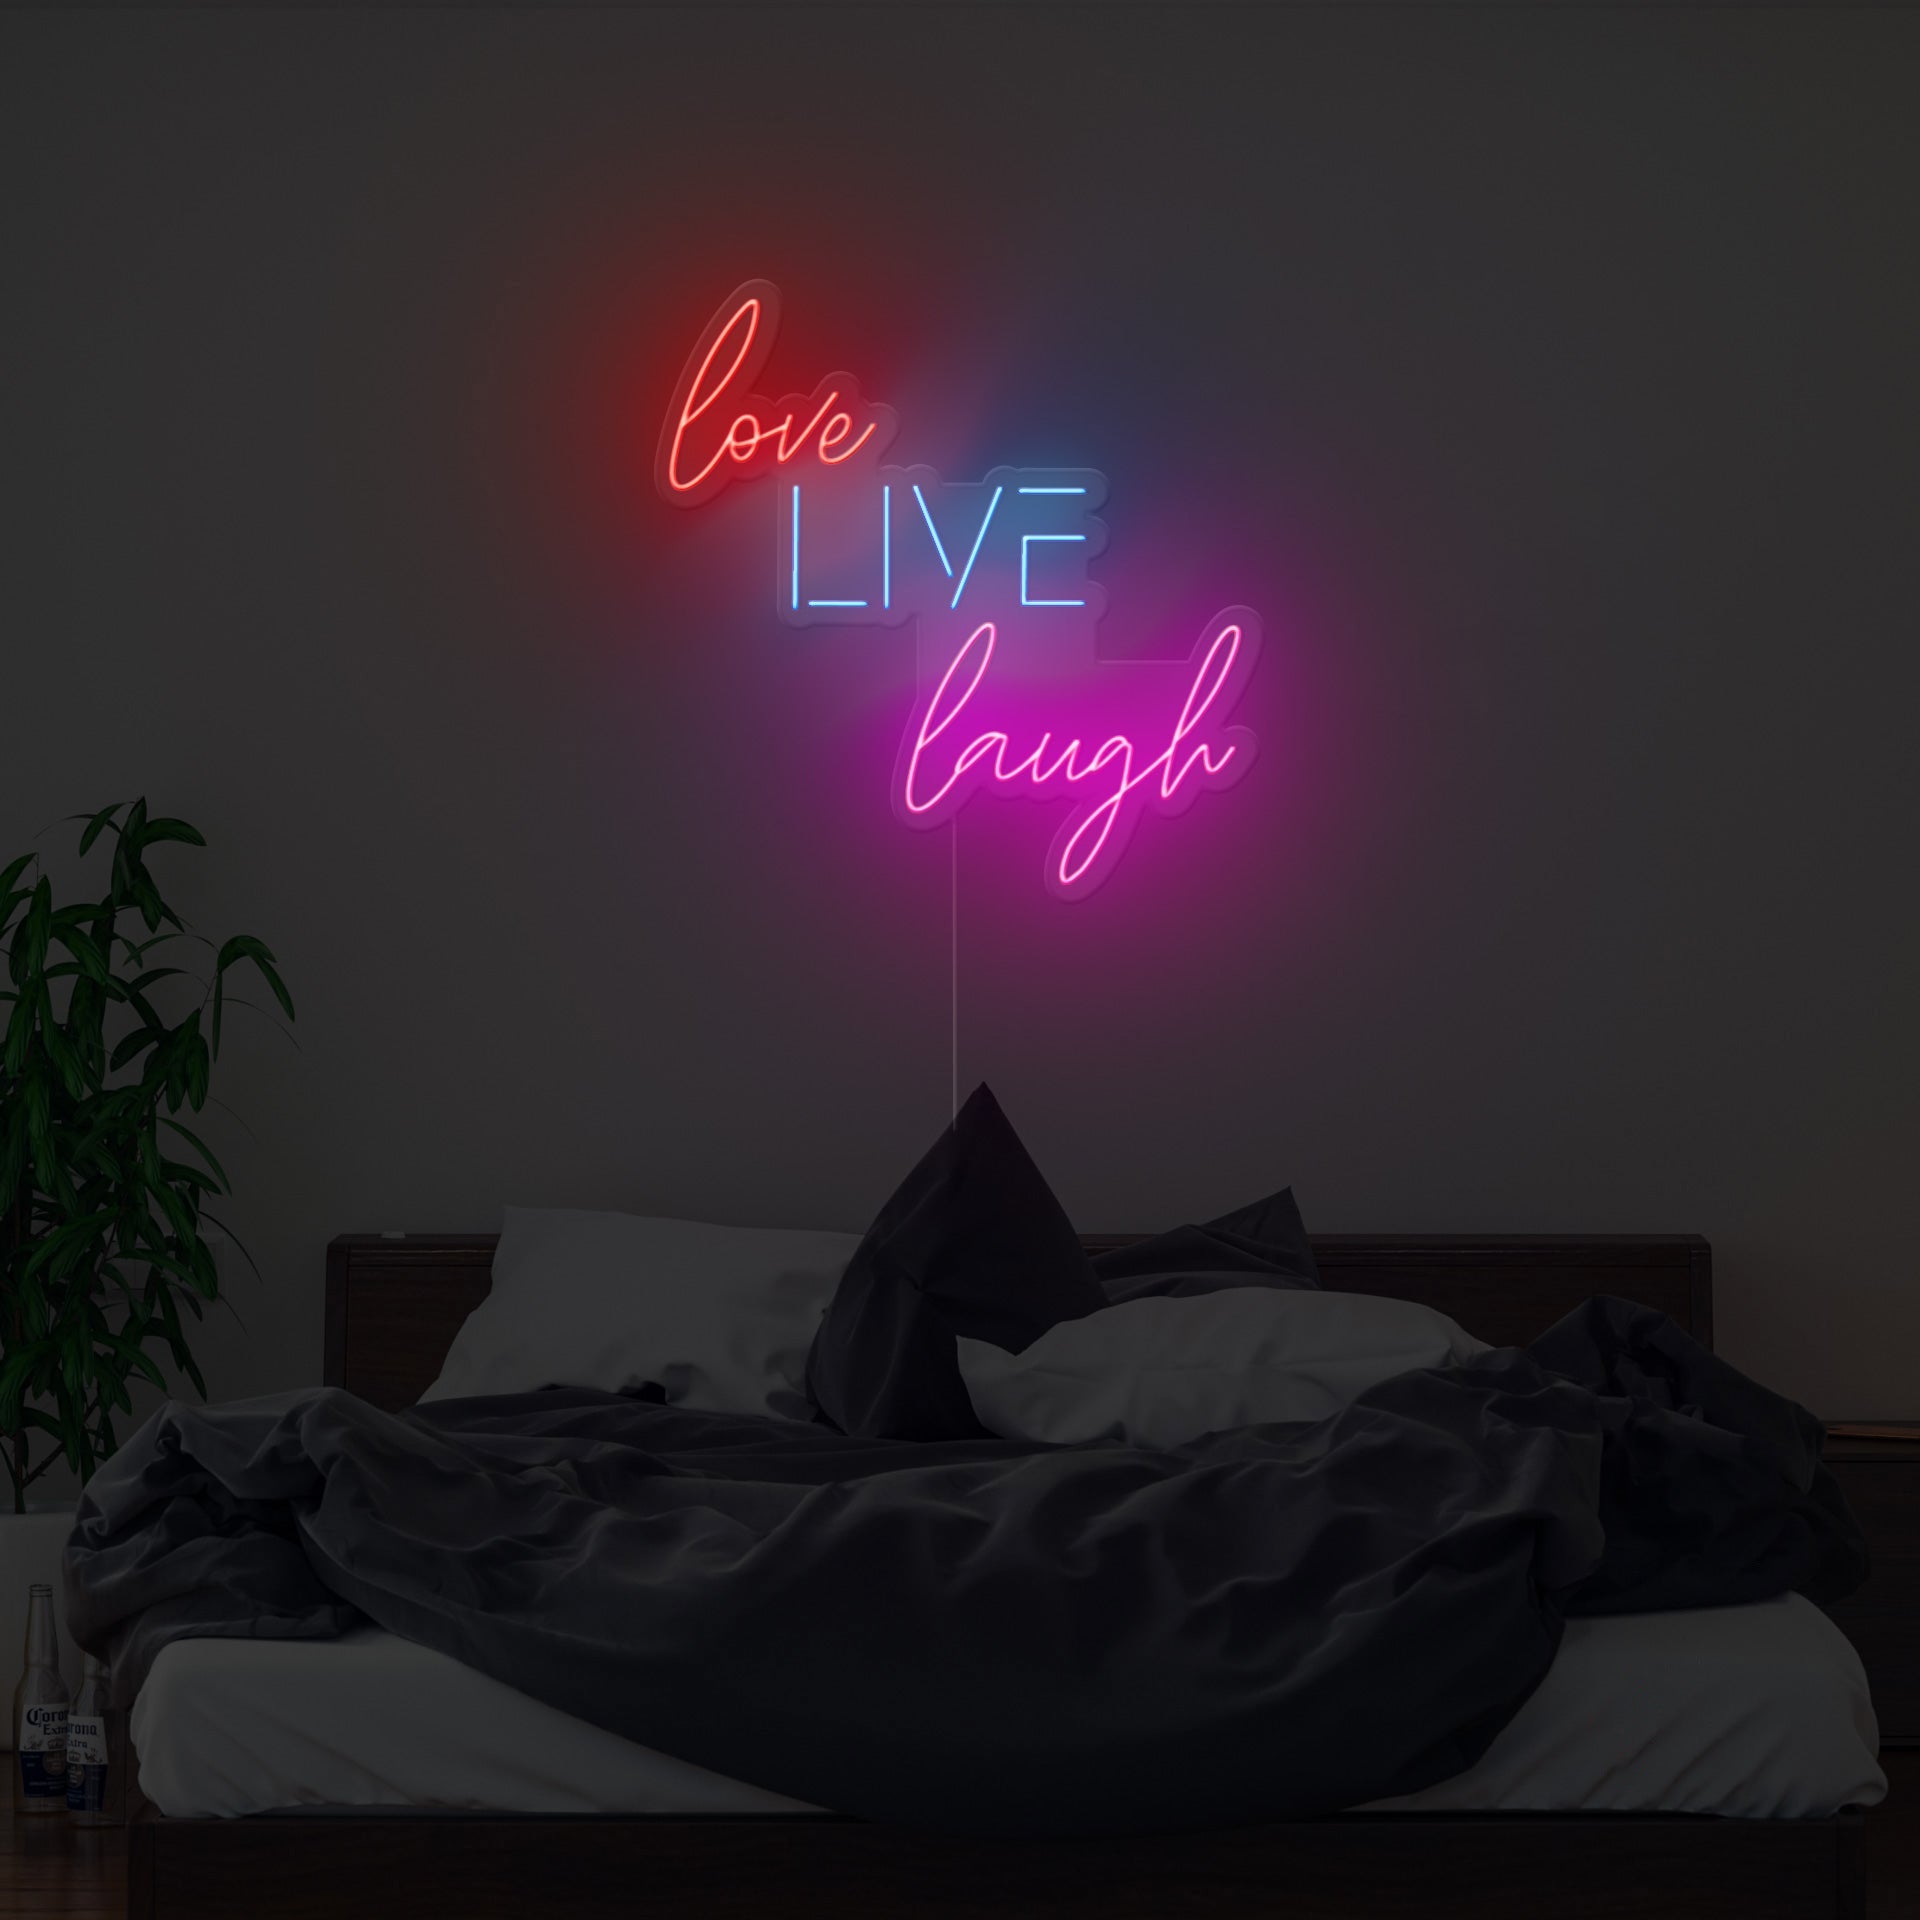 love-live-laugh-neon-sign